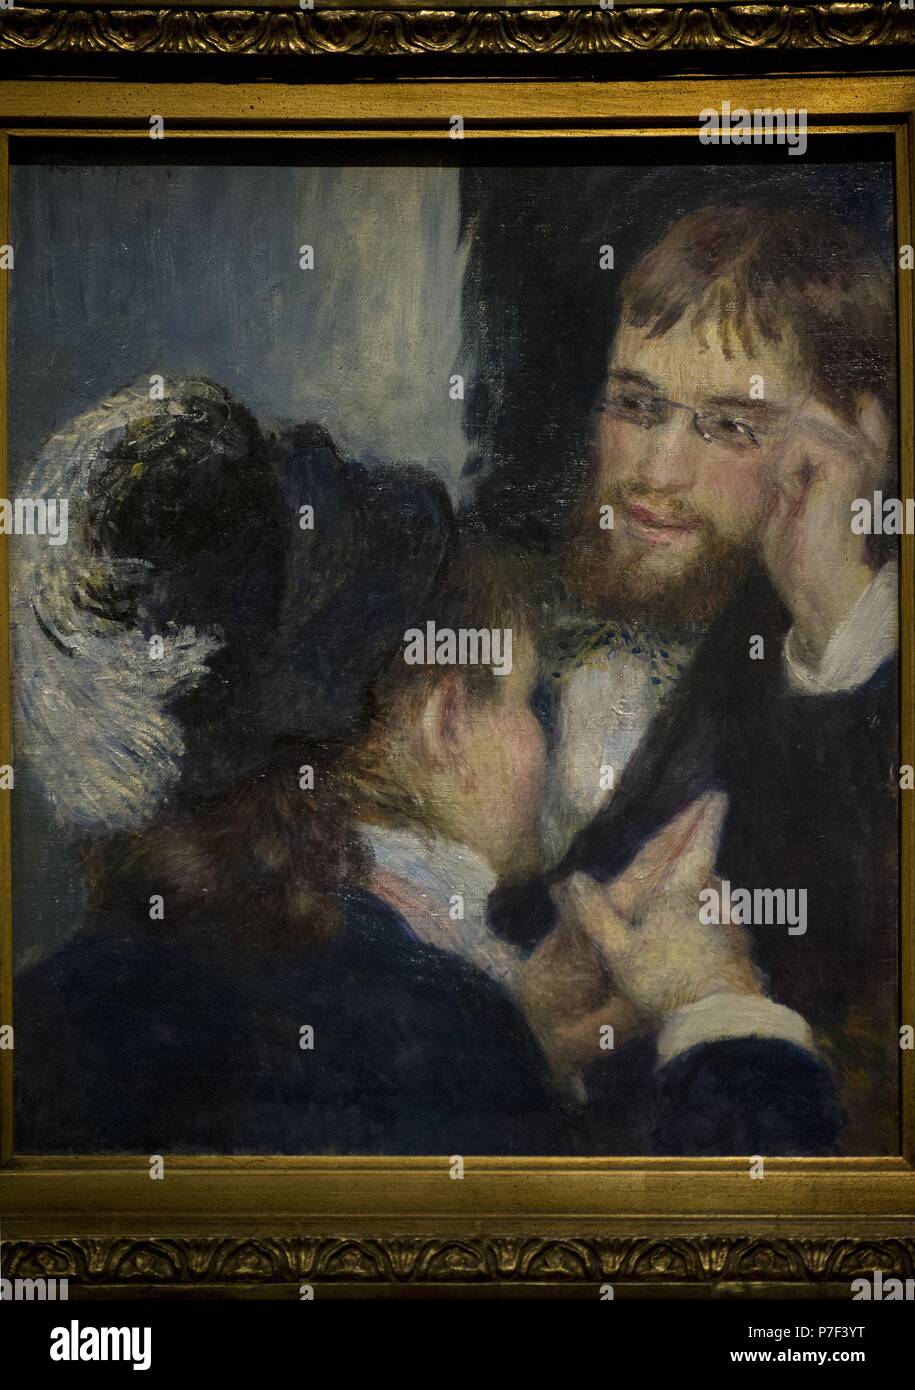 Pierre-Auguste Renoir (1841-1919). French painter. Conversation, 1870s. National Museum. Stockholm. Sweden. Stock Photo